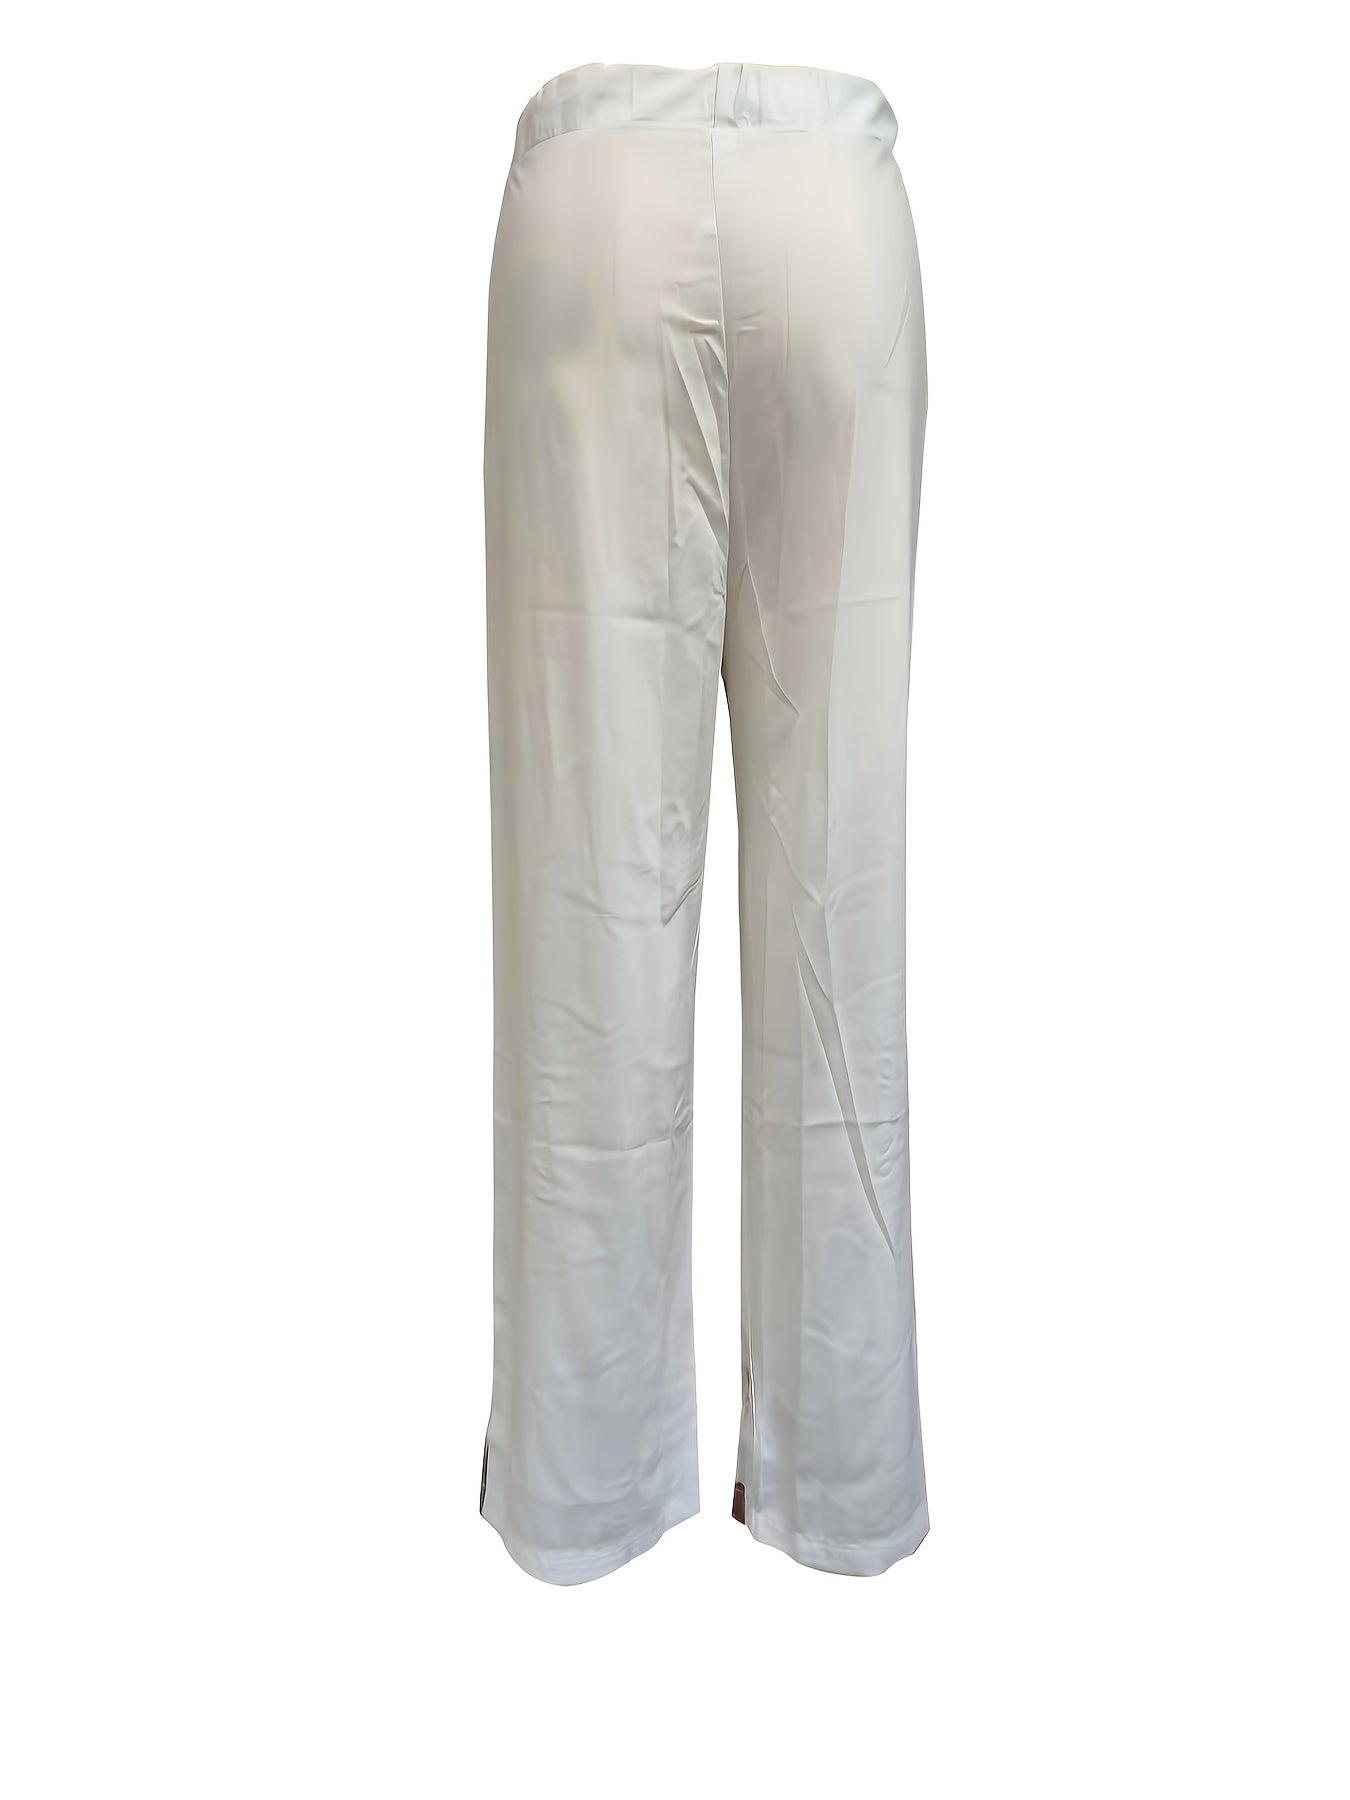 Men's Note Pattern Print Drawstring Bell-bottom Pants Beach Pant Portray Pattern Casual Slim Pants Streetwear Hip Hop Rapper Style